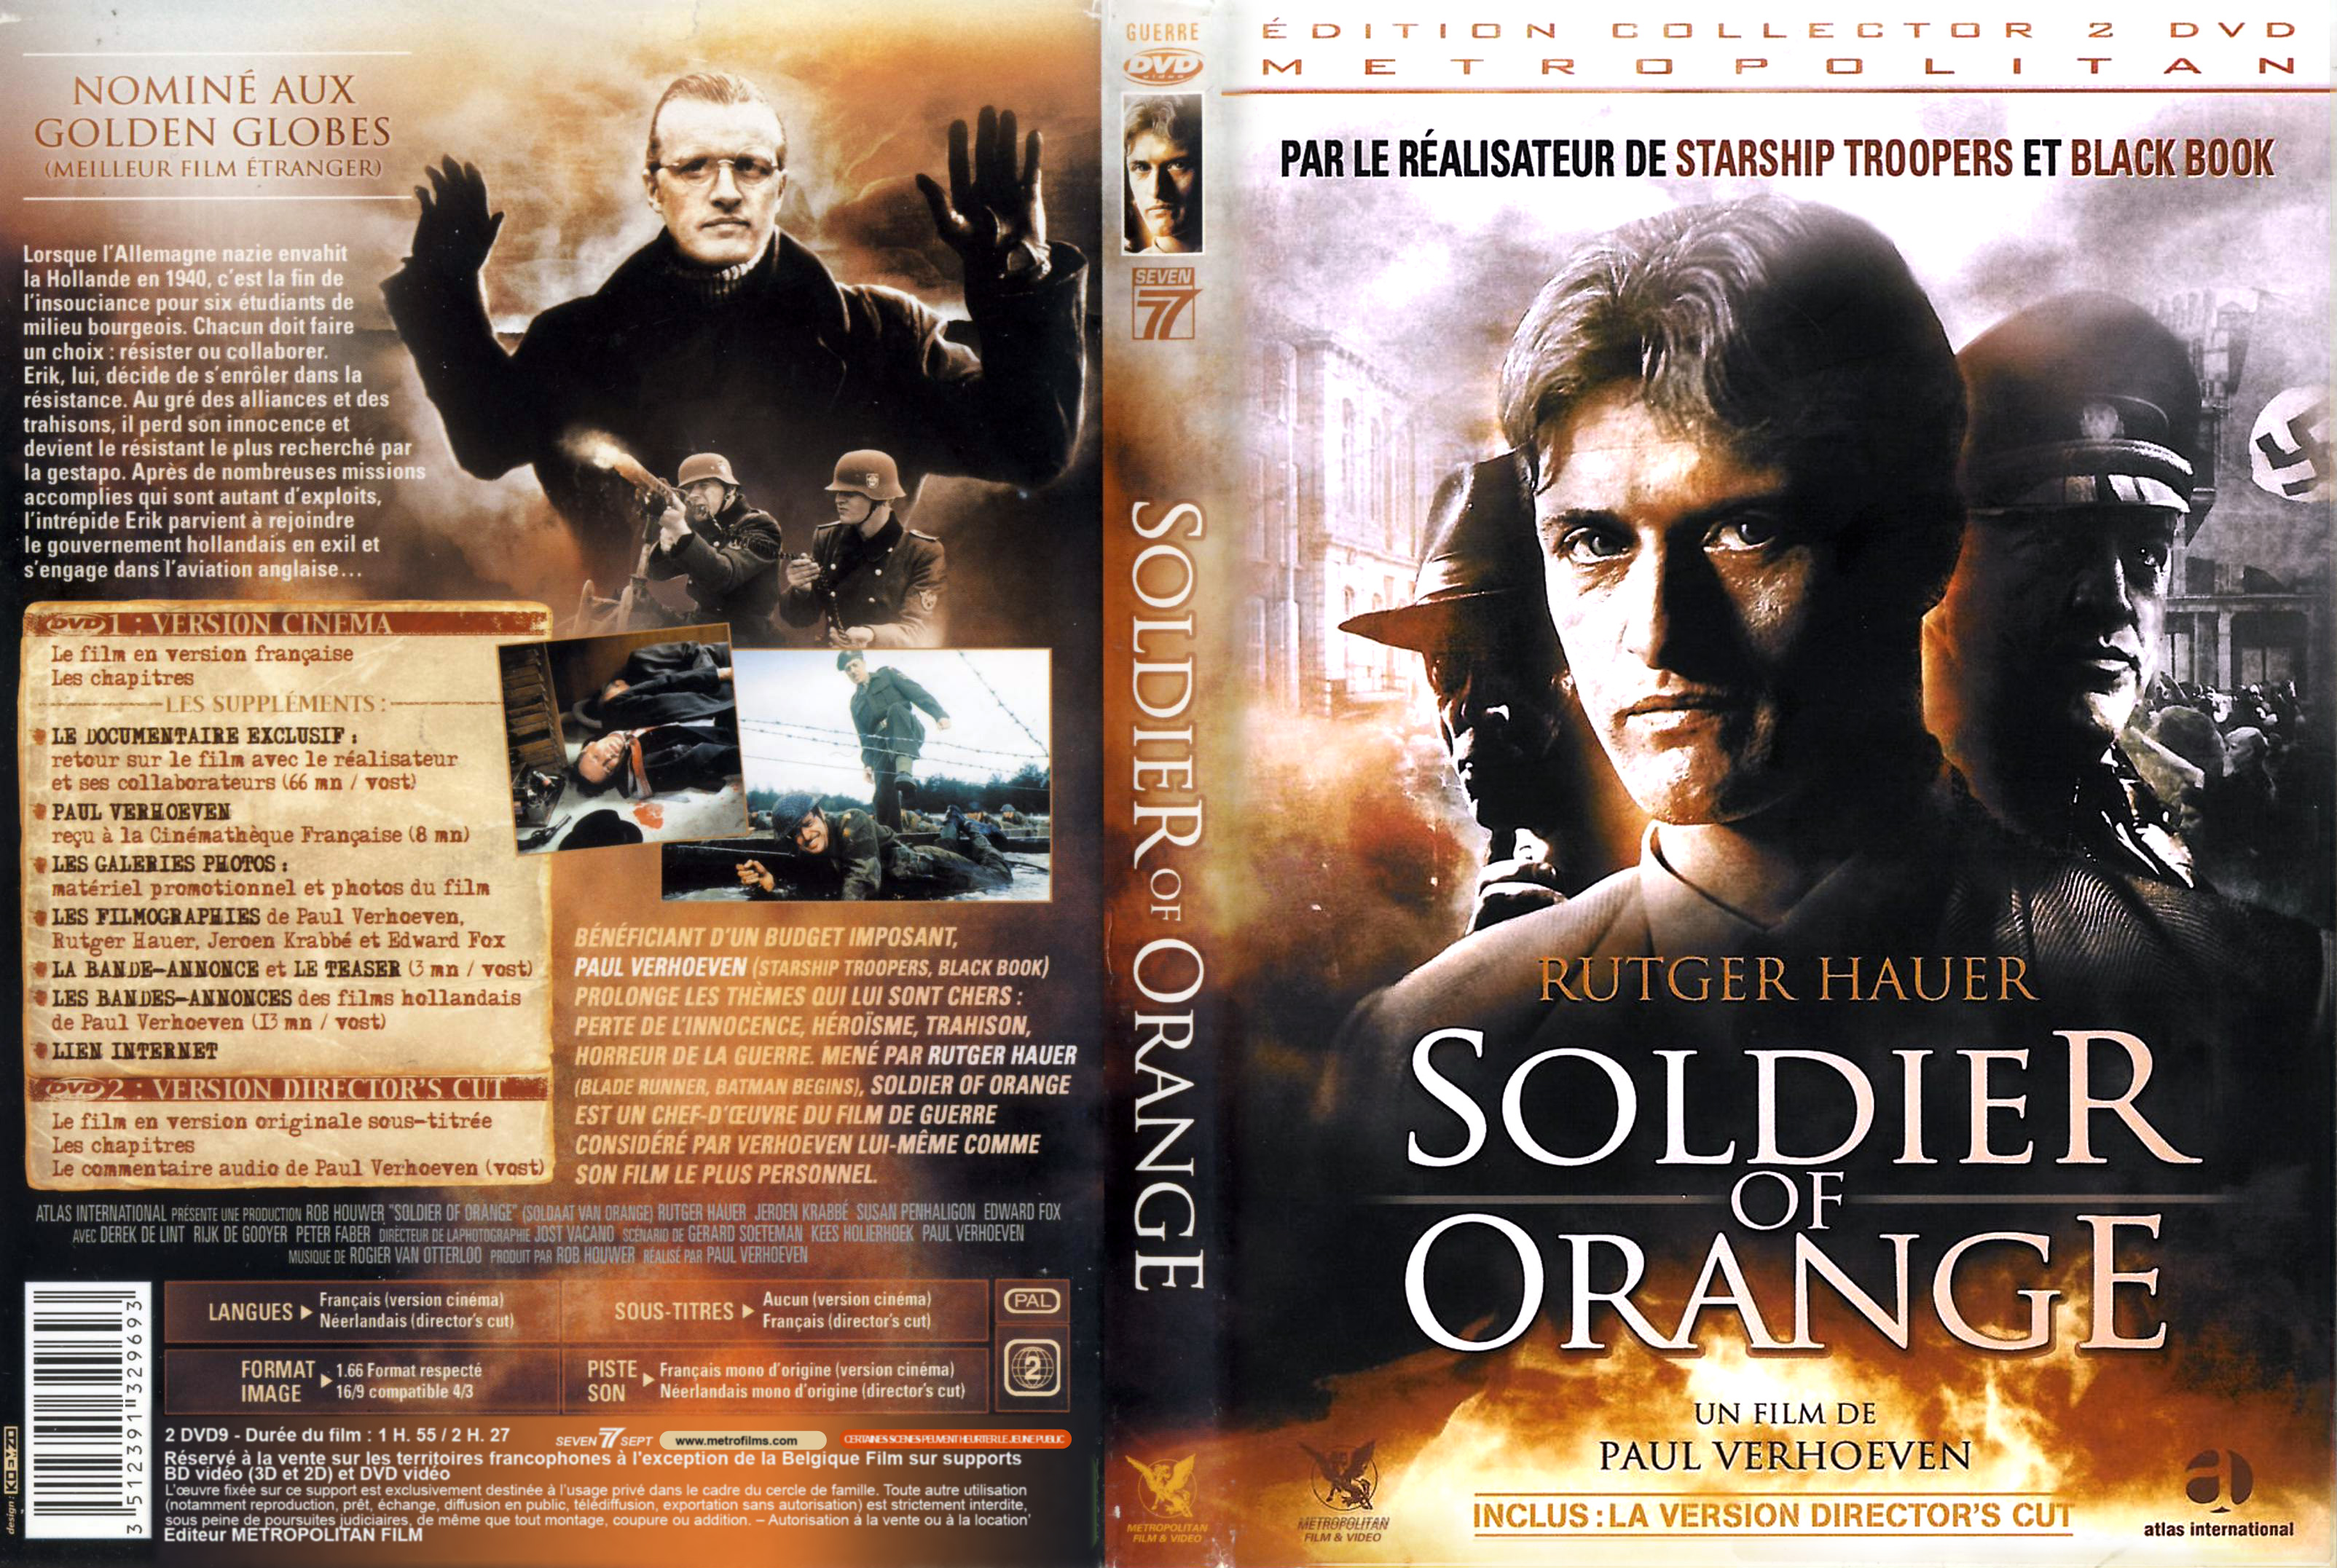 Jaquette DVD Soldier of orange